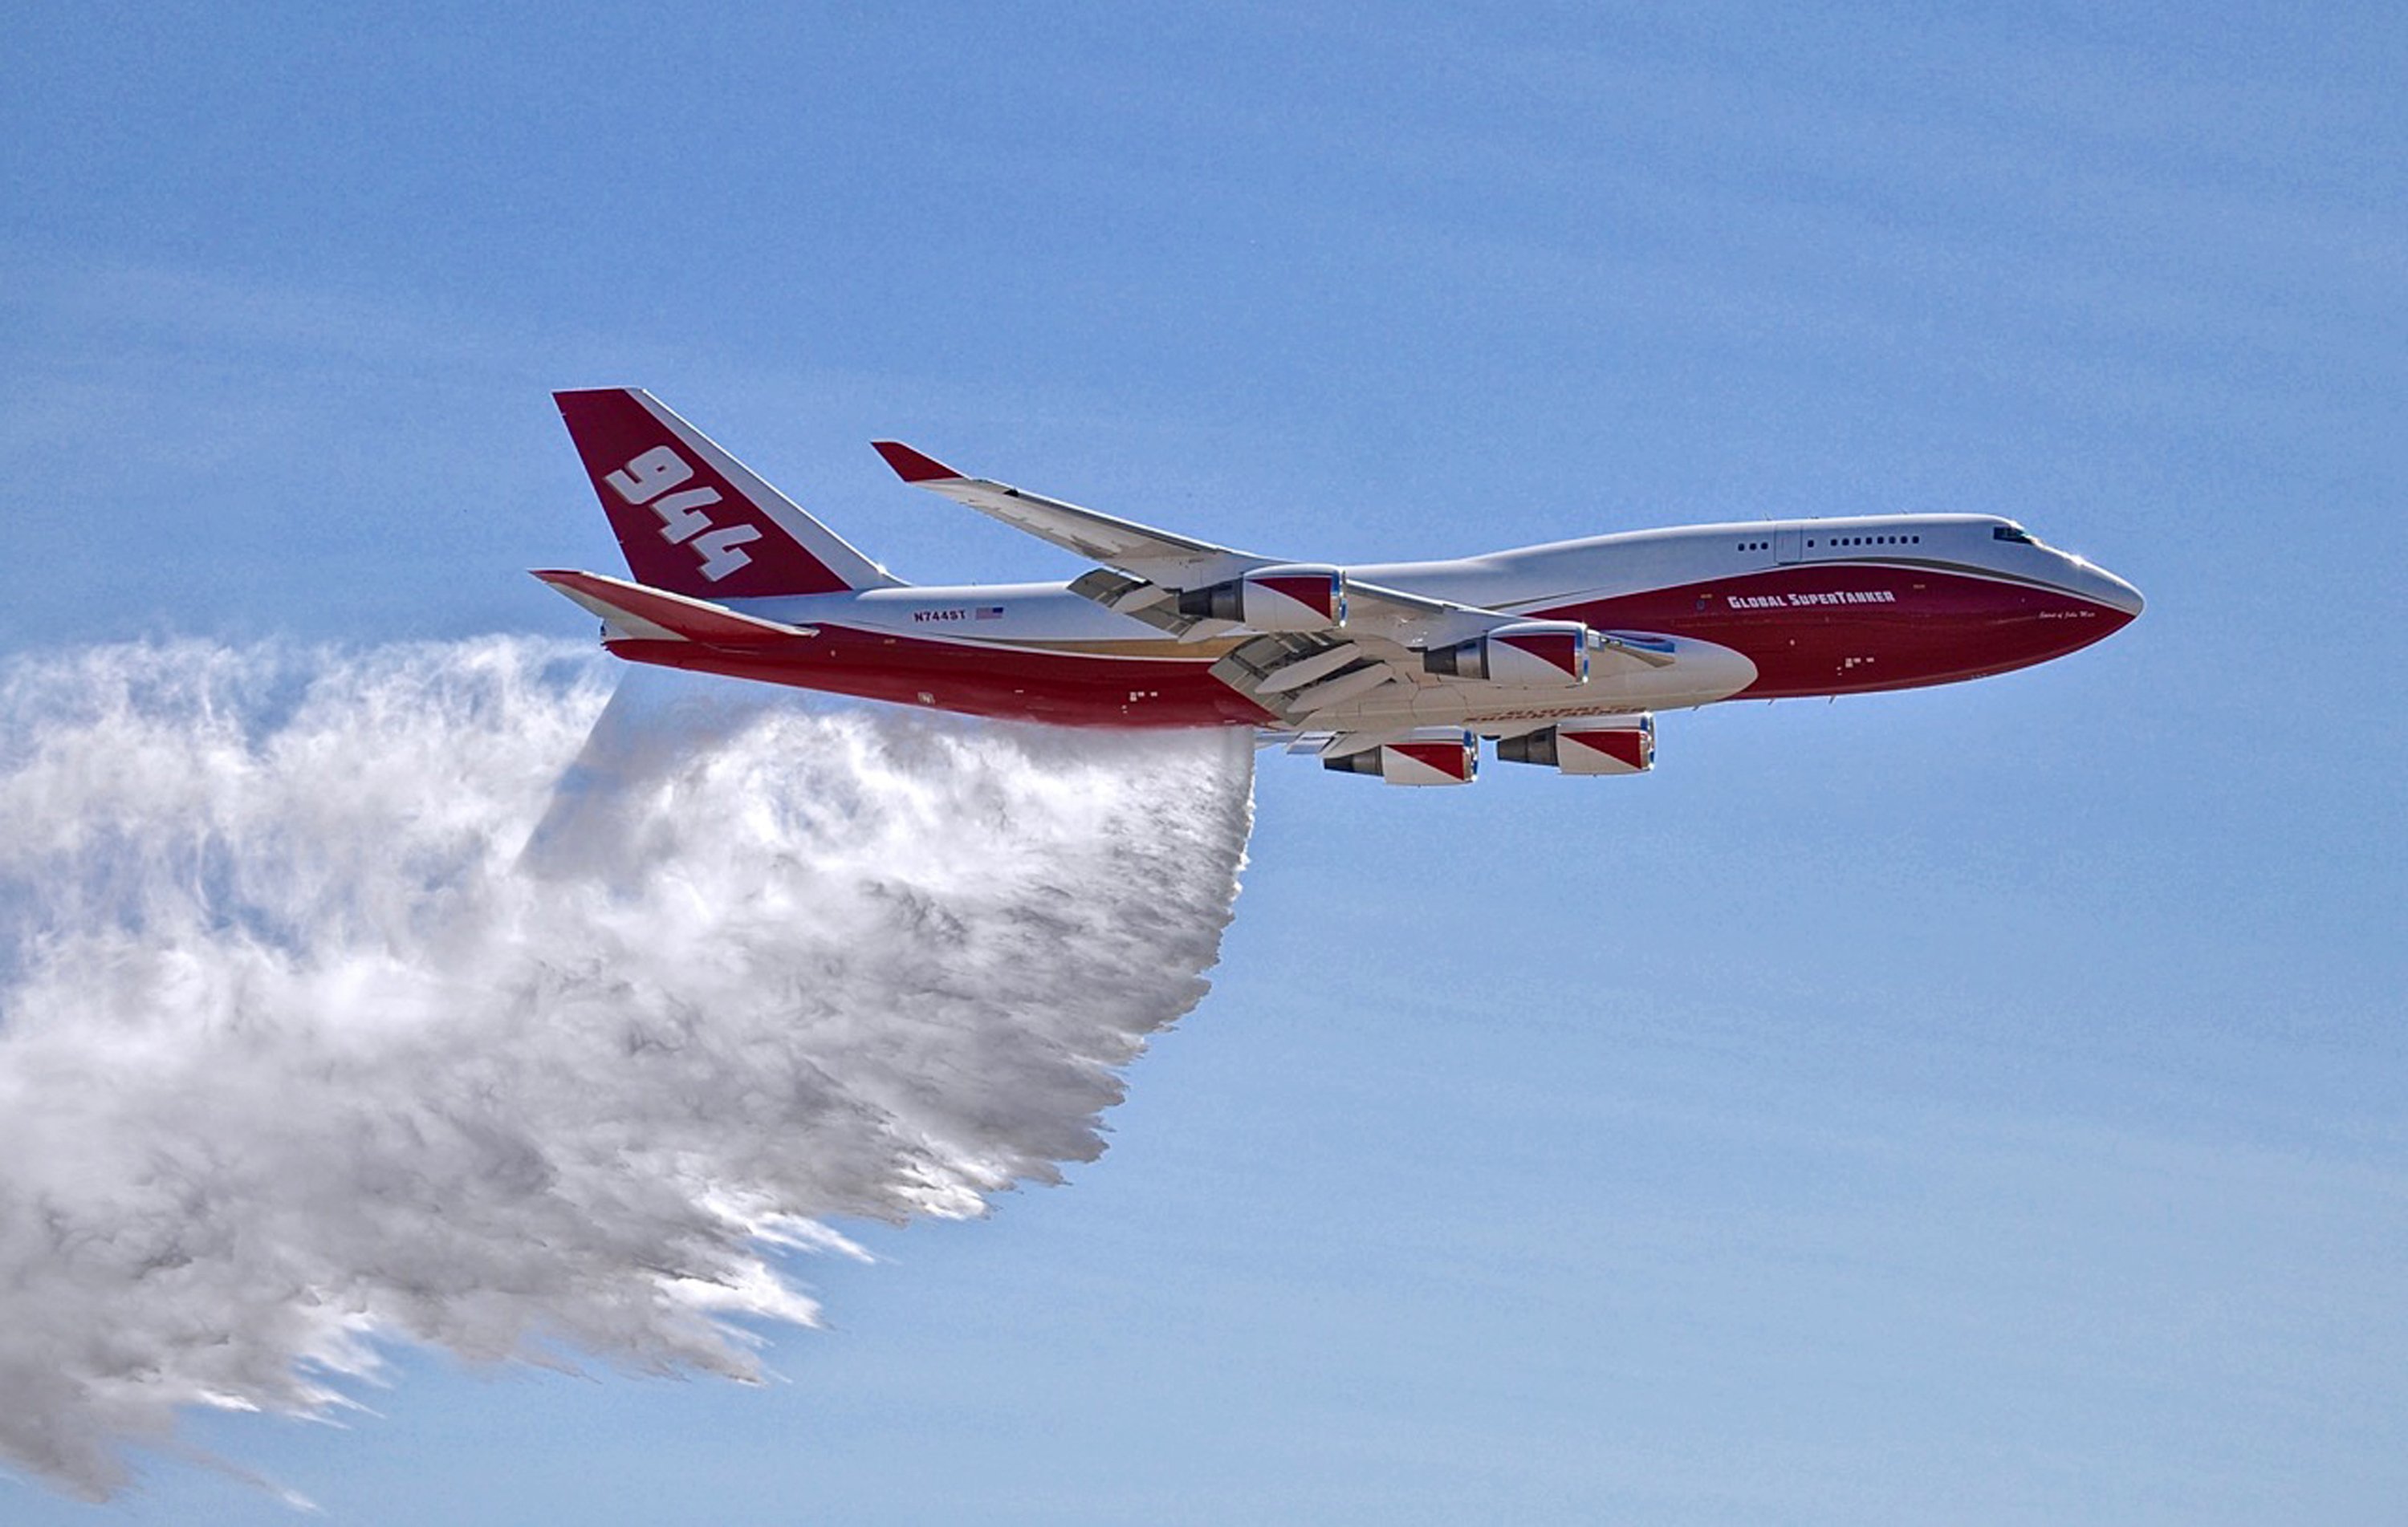 More information about "Global SuperTanker: Το μεγαλύτερο πυροσβεστικό αεροπλάνο στον κόσμο"